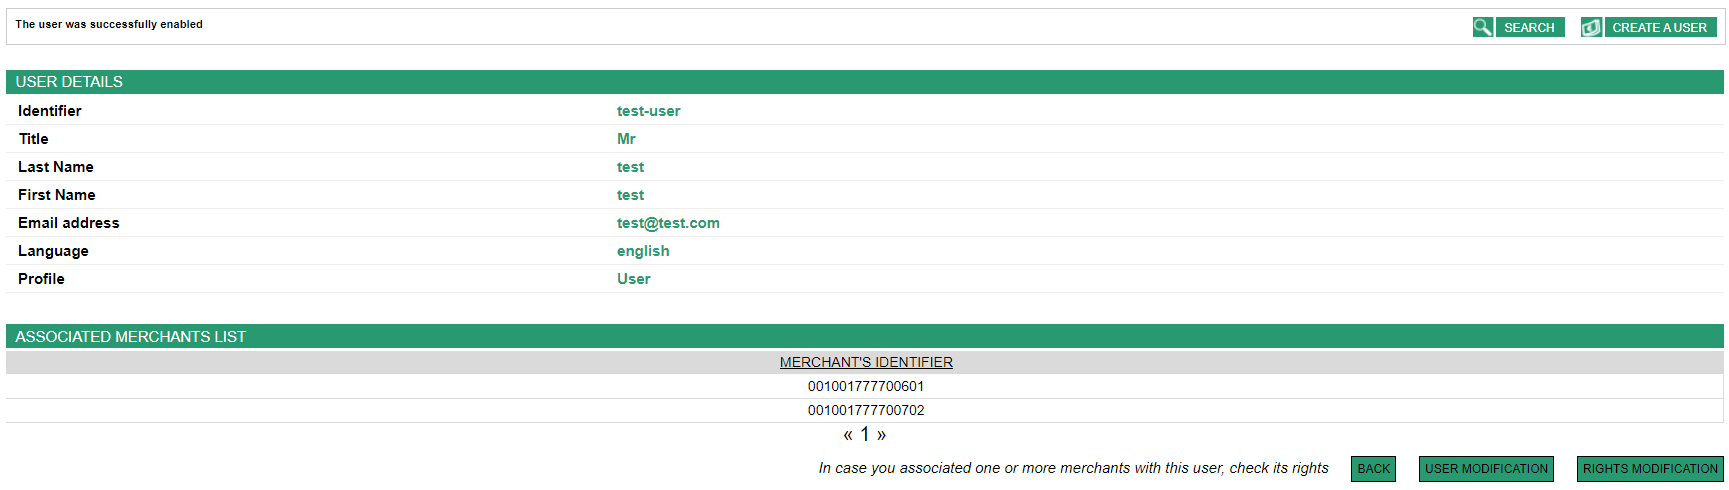 user details: identifier, name, email address, etc.